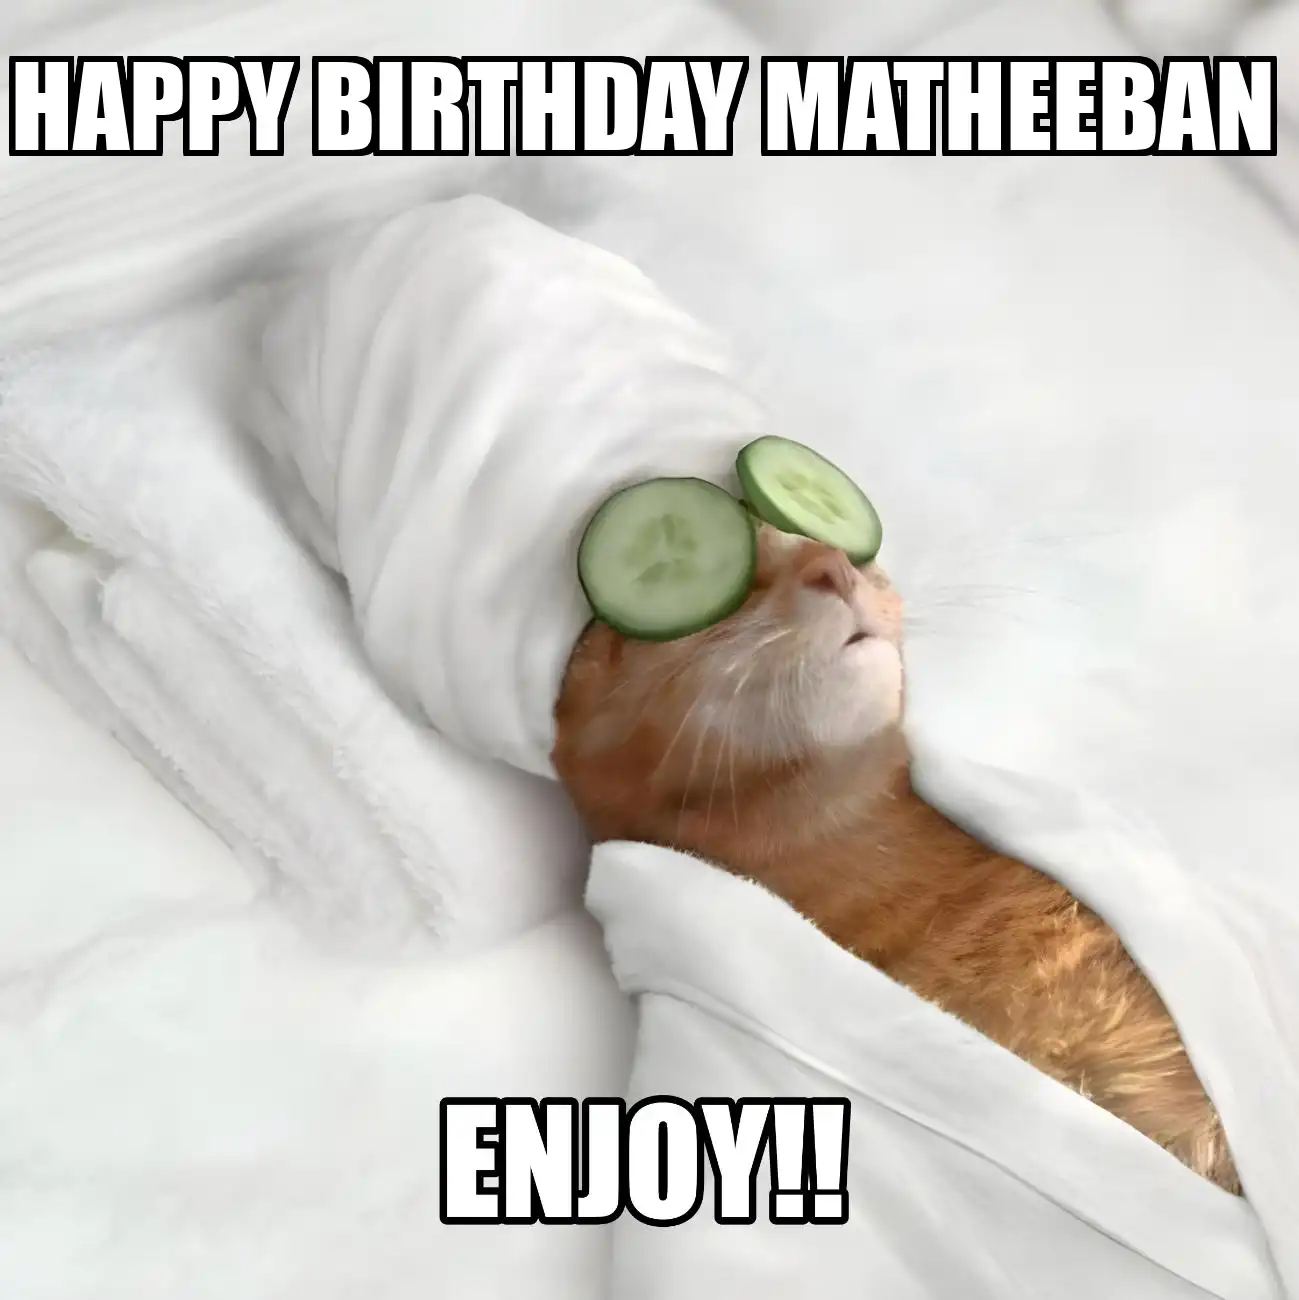 Happy Birthday Matheeban Enjoy Cat Meme